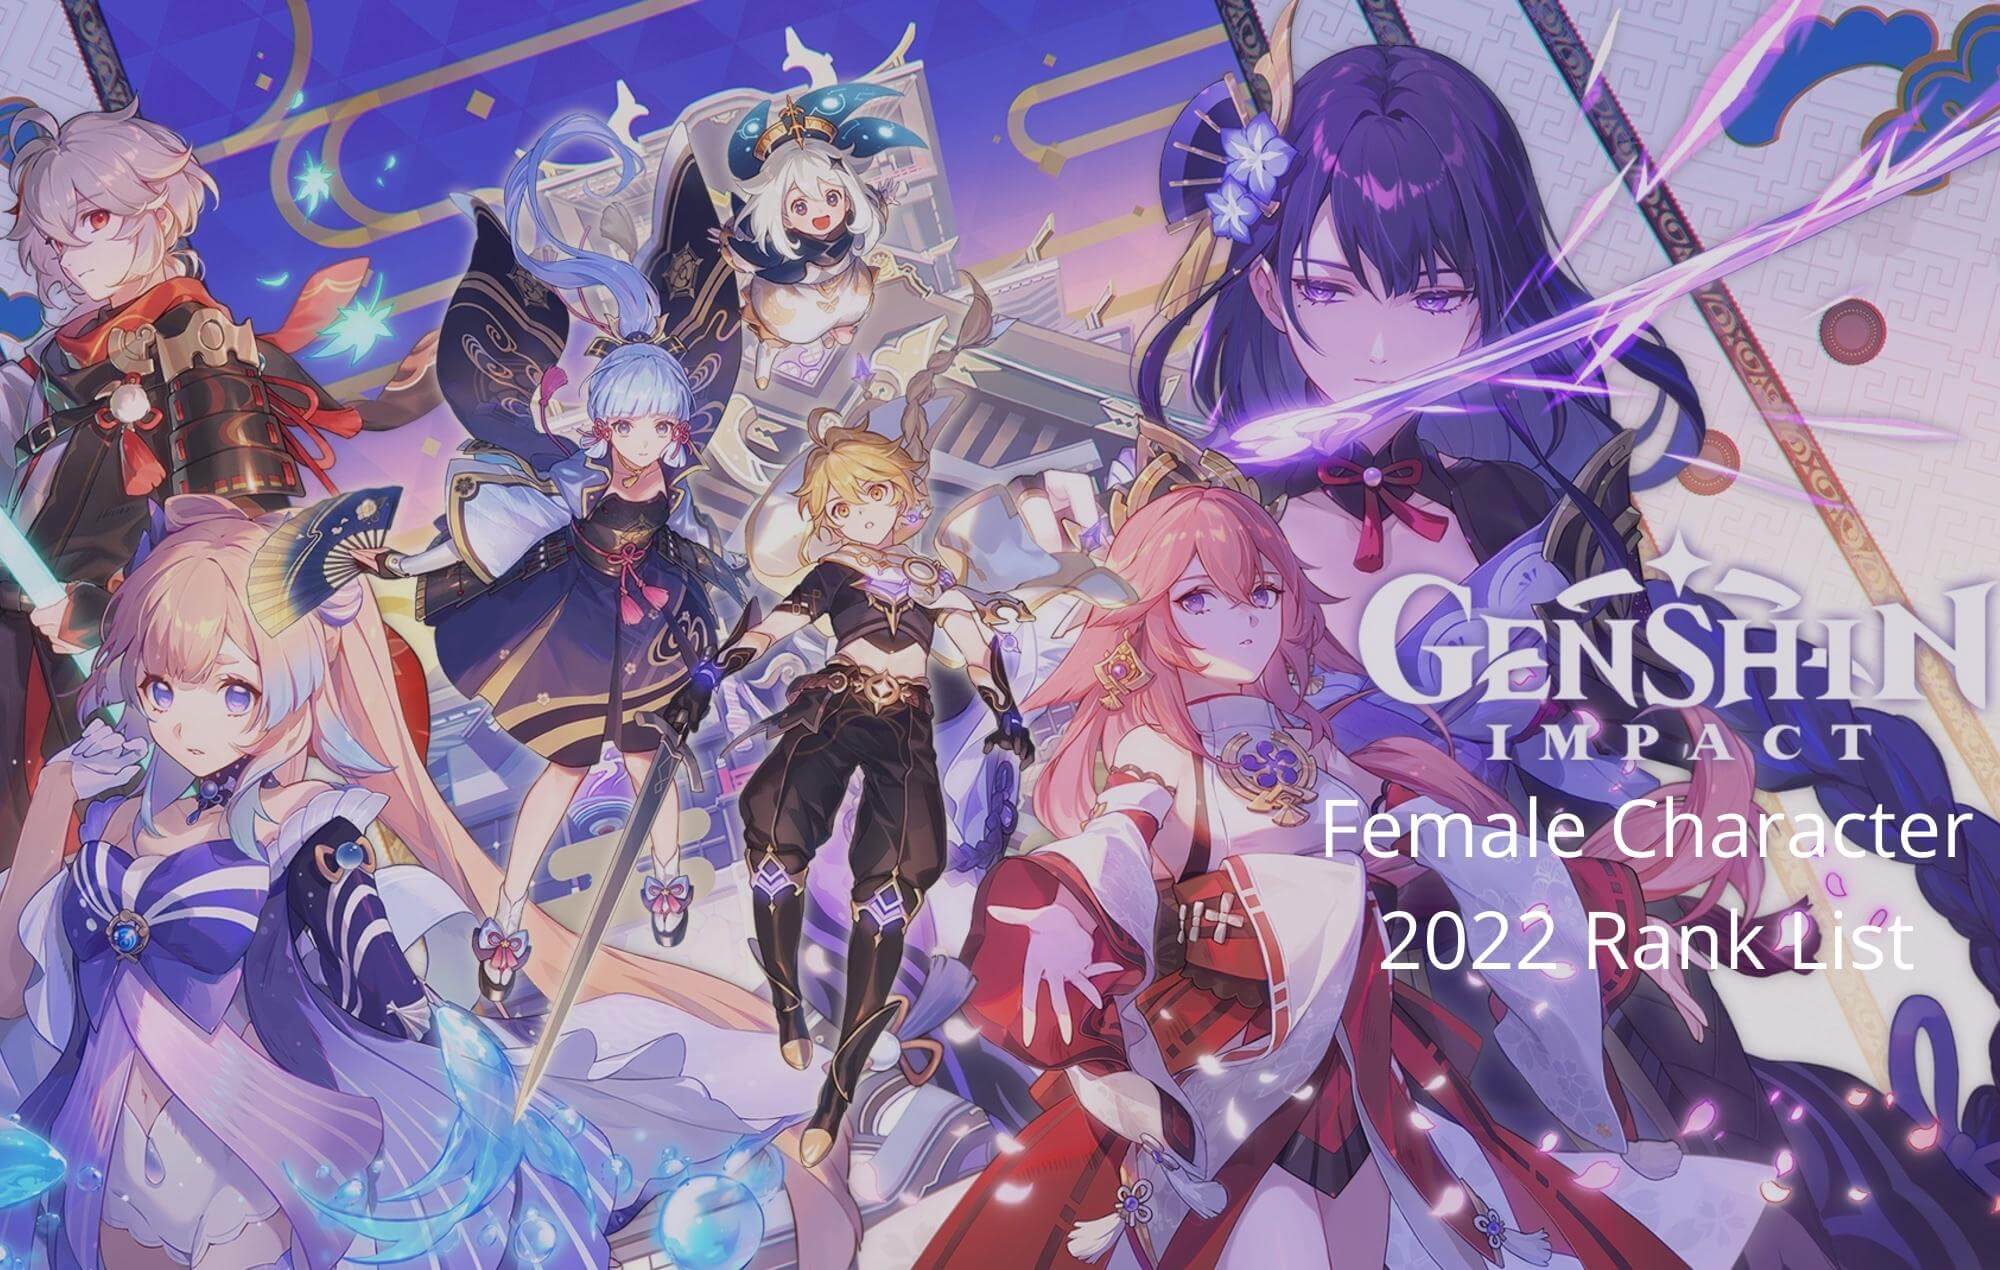 Genshin Impact Female Character 2022 Rank List